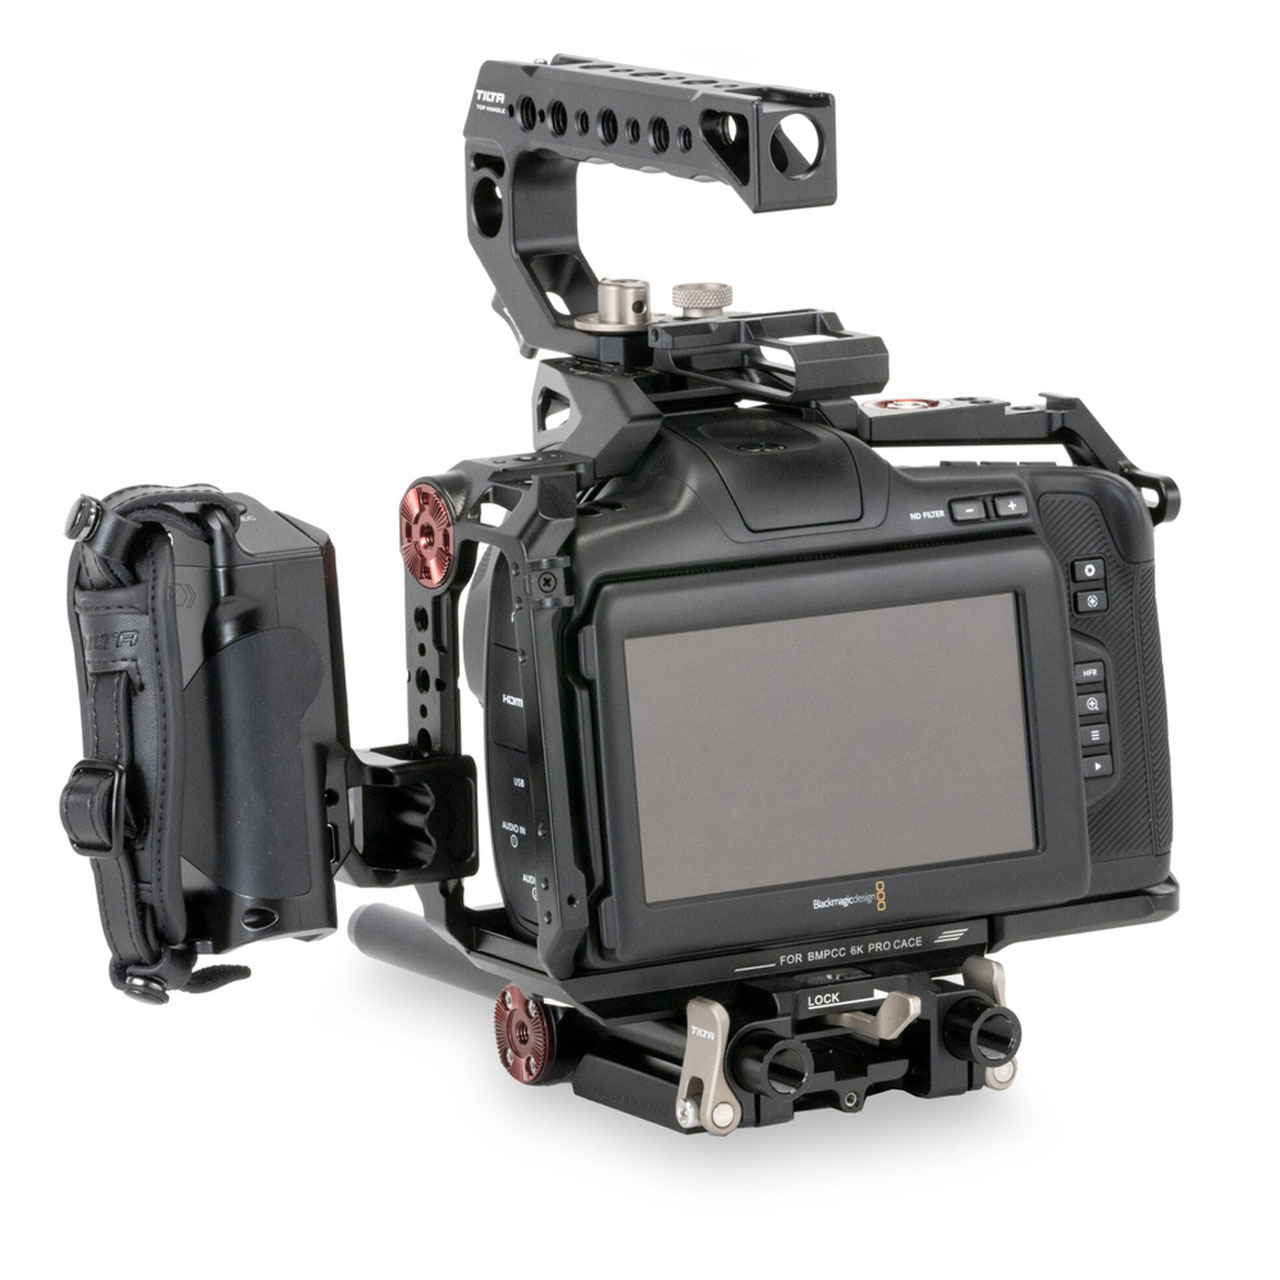 blackmagic-pocket-cinema-camera-6k-pro-shooting-kit